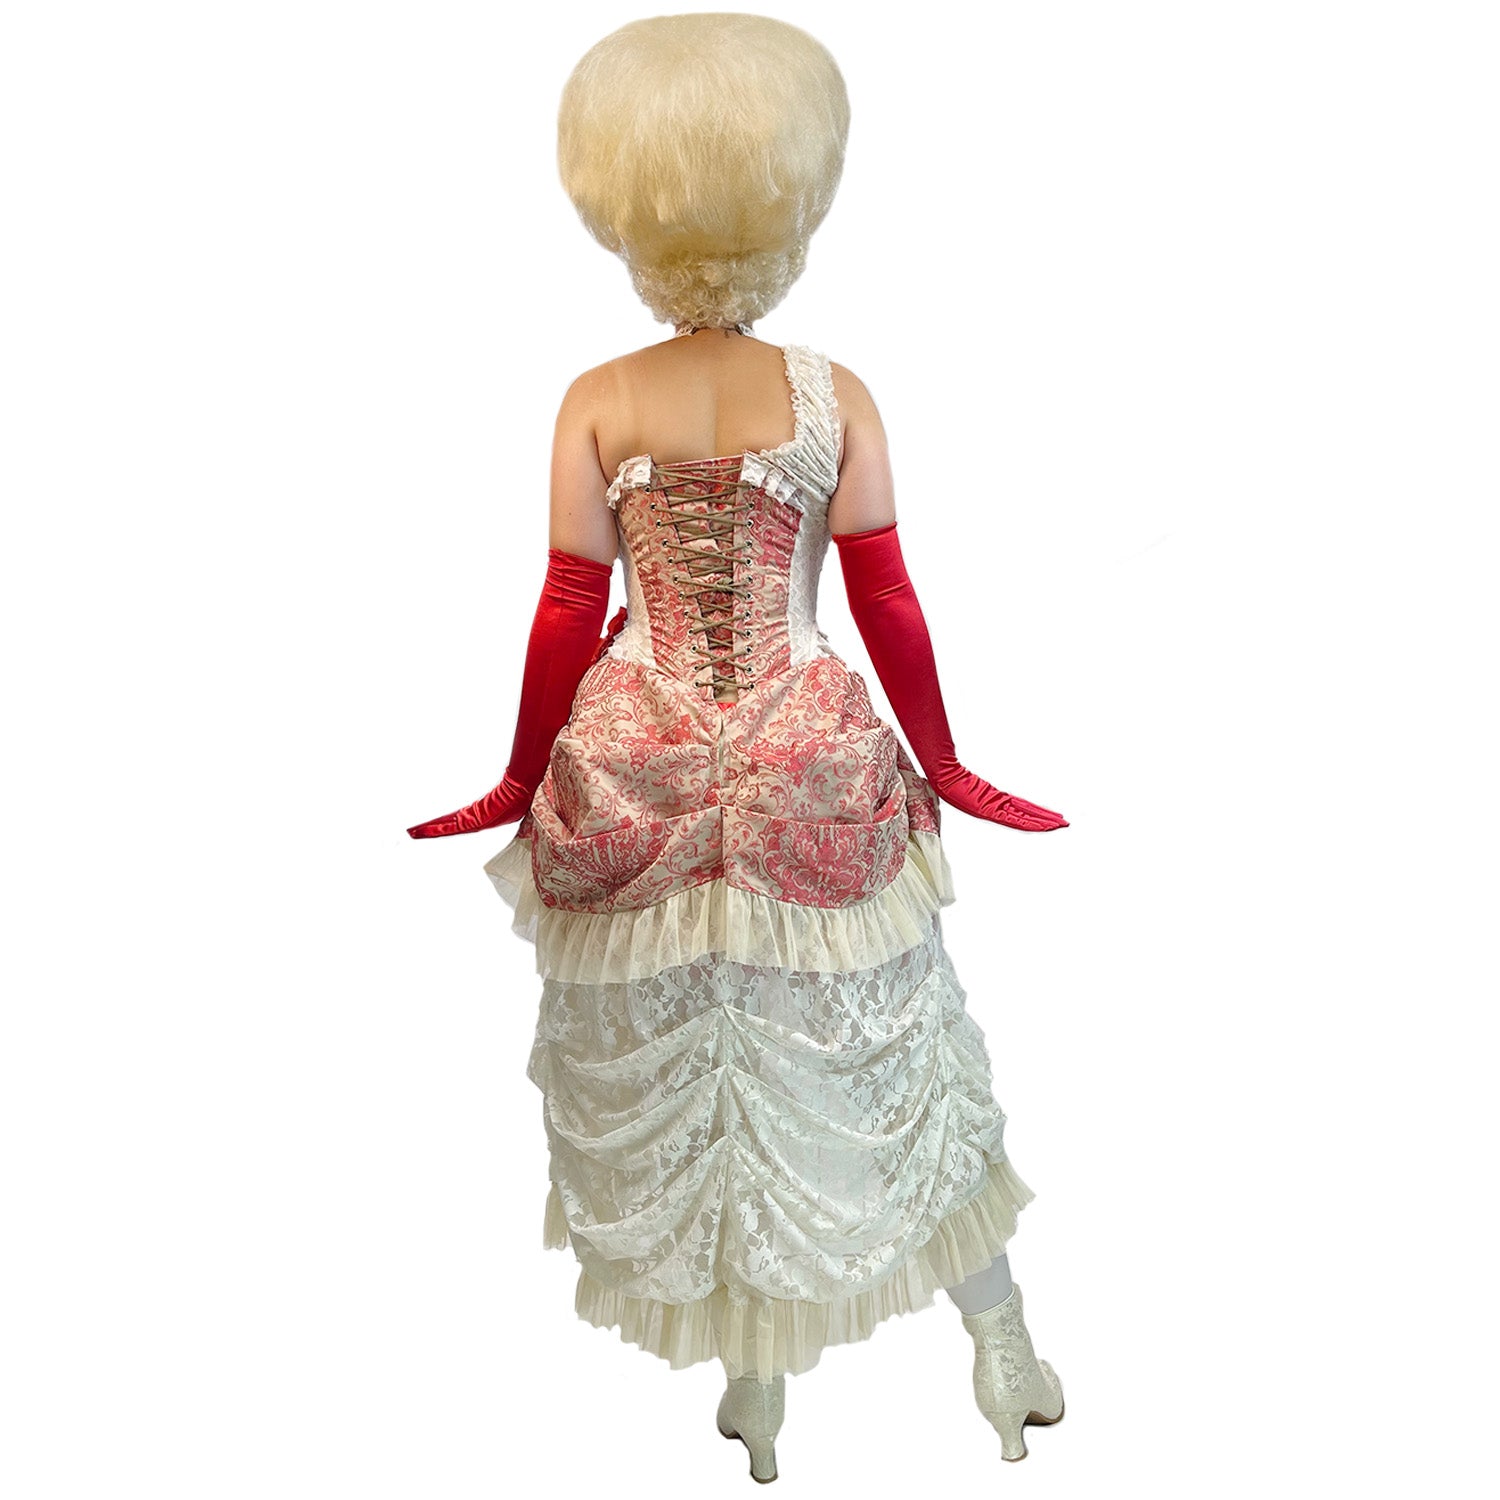 Premier Colonial Ballroom Red Flower Dress Adult Costume